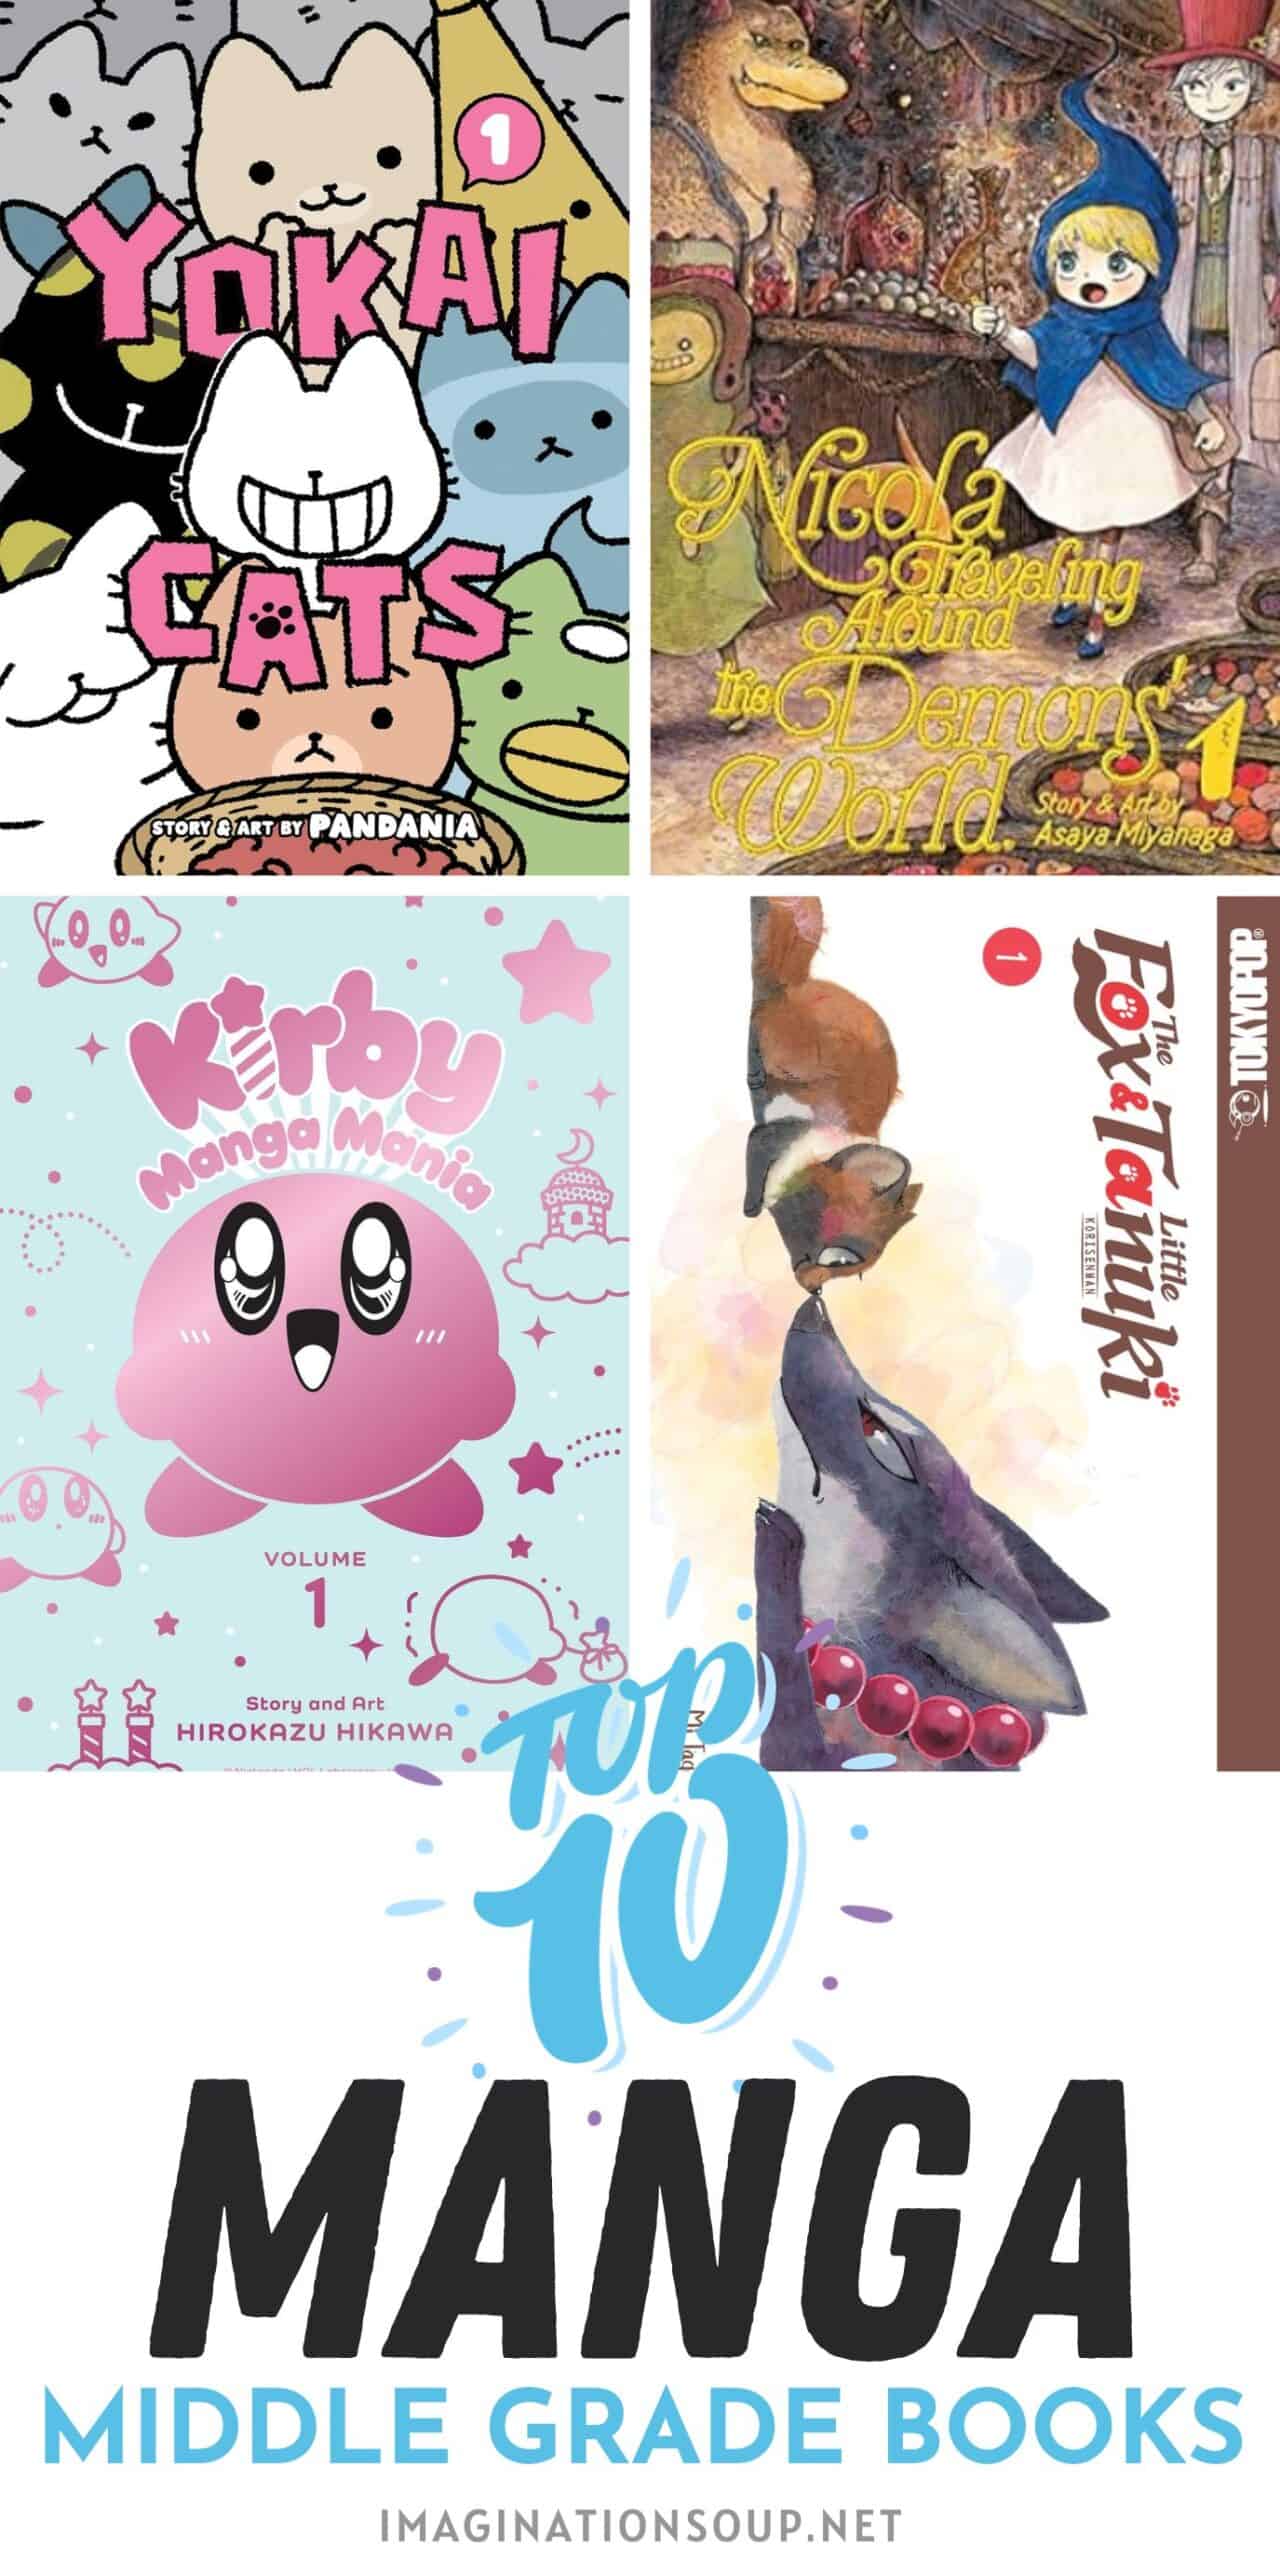 manga books for middle grade kids